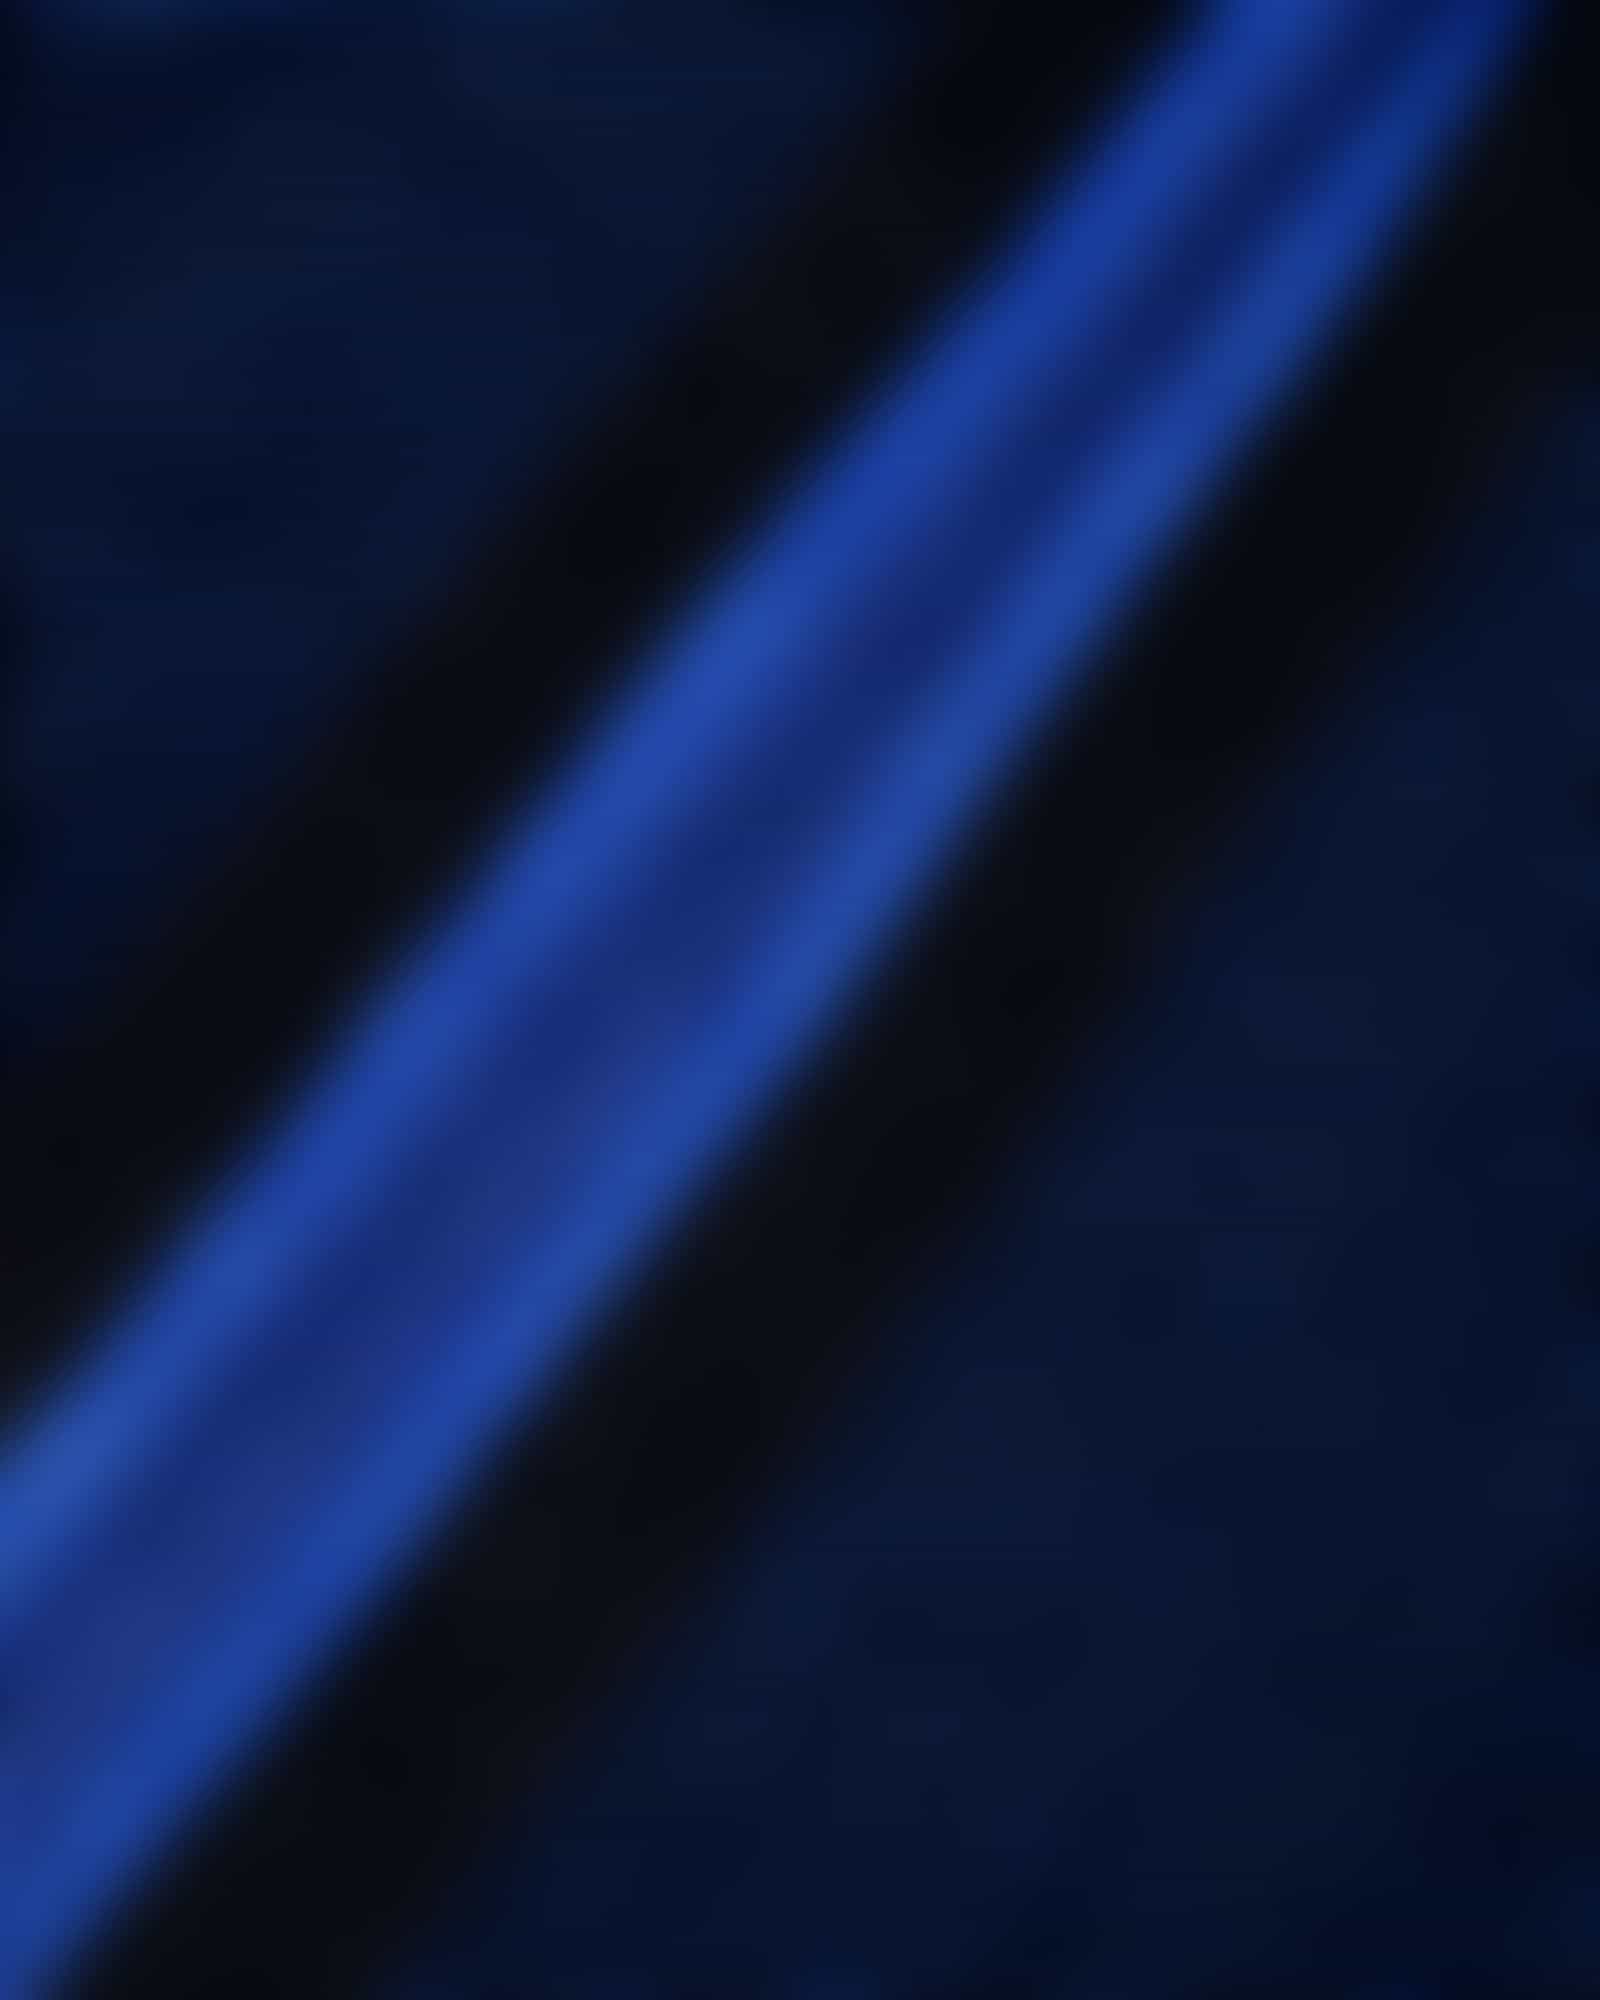 Cawö - Herren Bademantel Kimono 4839 - Farbe: blau/schwarz - 19 - S